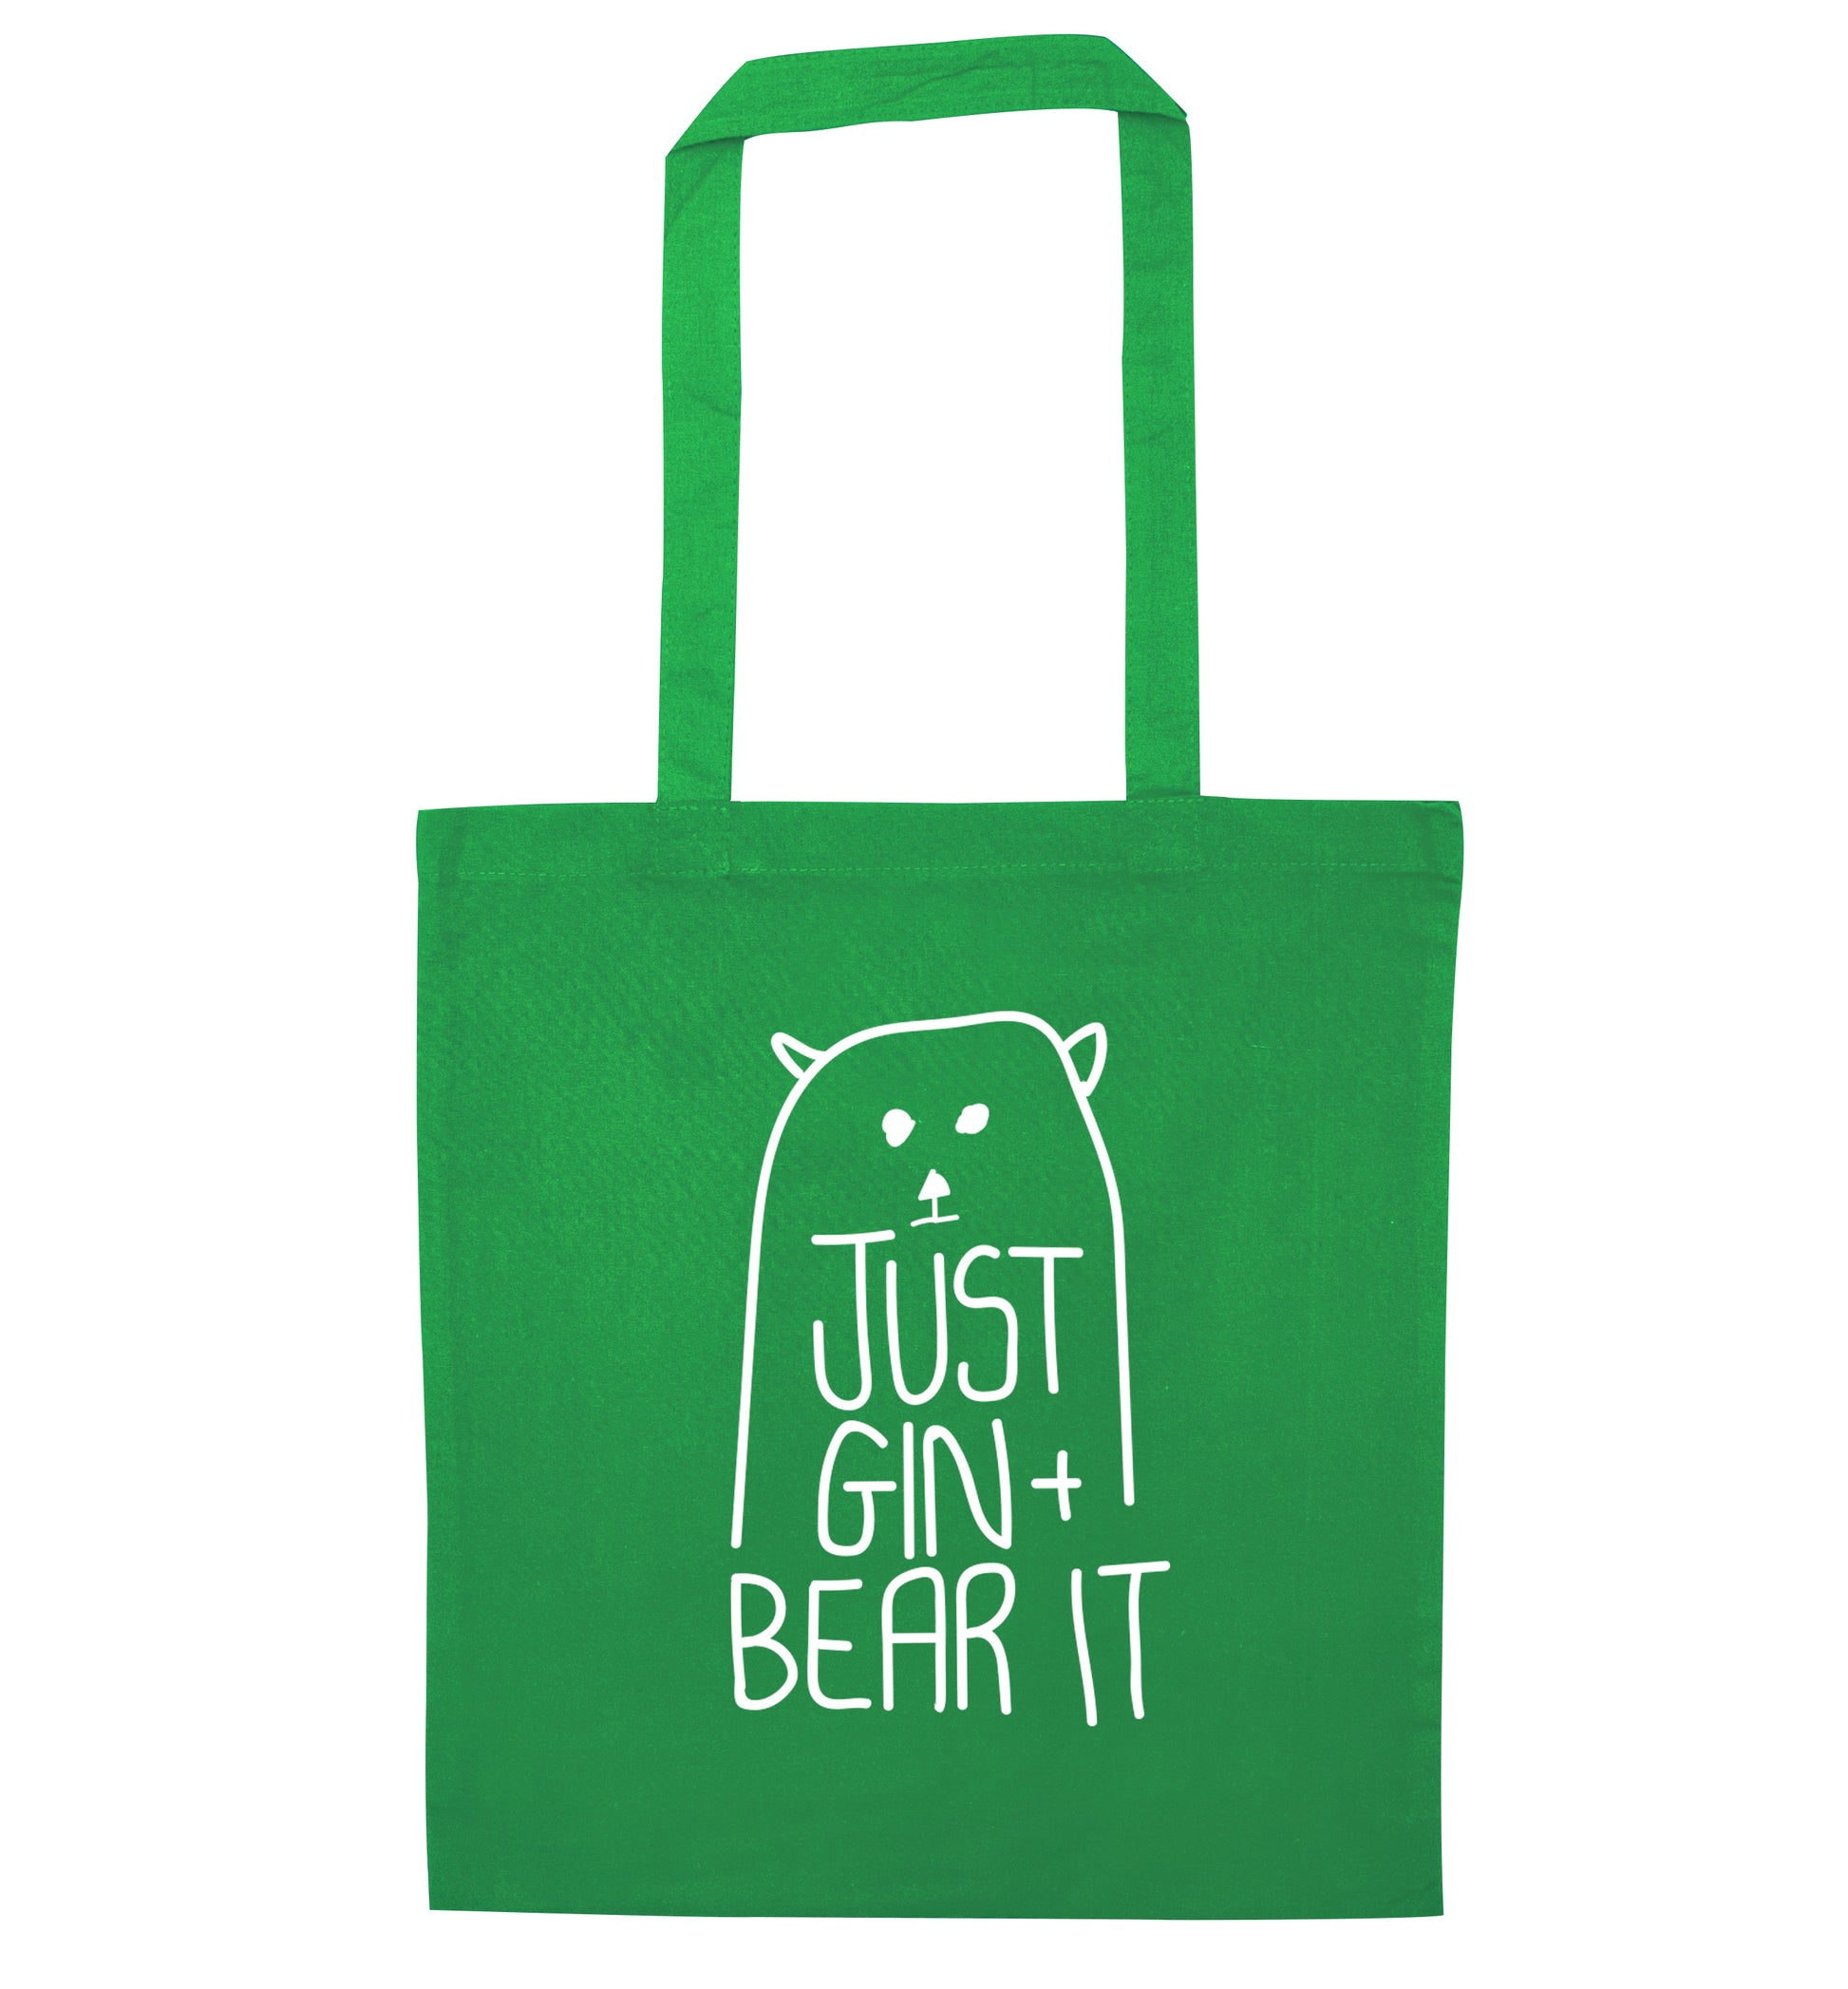 Just gin and bear it green tote bag